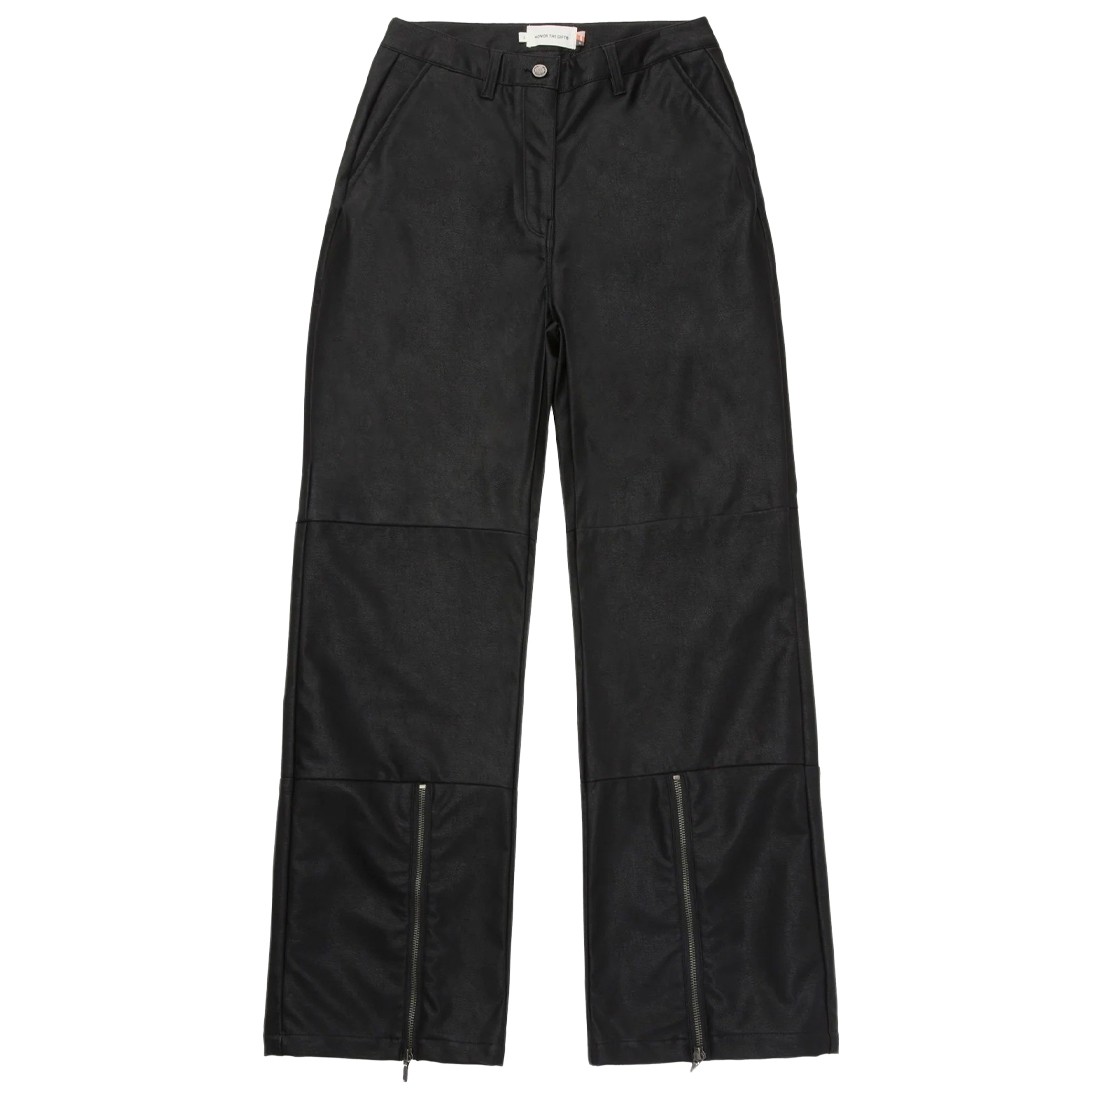 Buy FableStreet Black High Waist Side Zipper Turn Up Trousers online